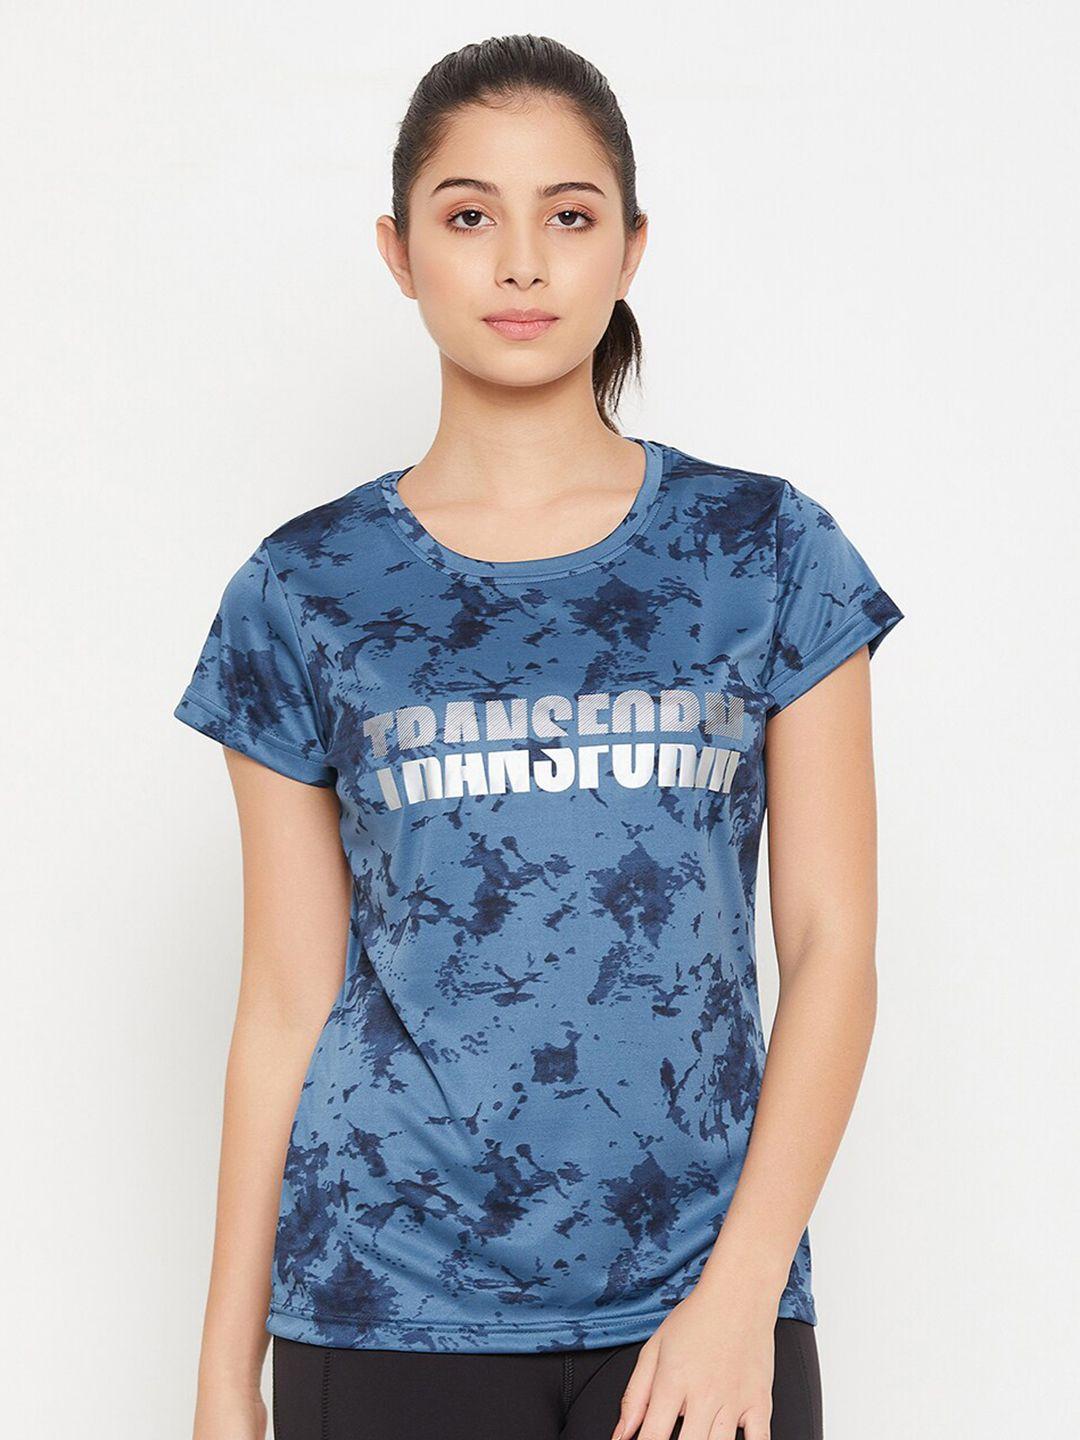 clovia women printed slim fit t-shirt